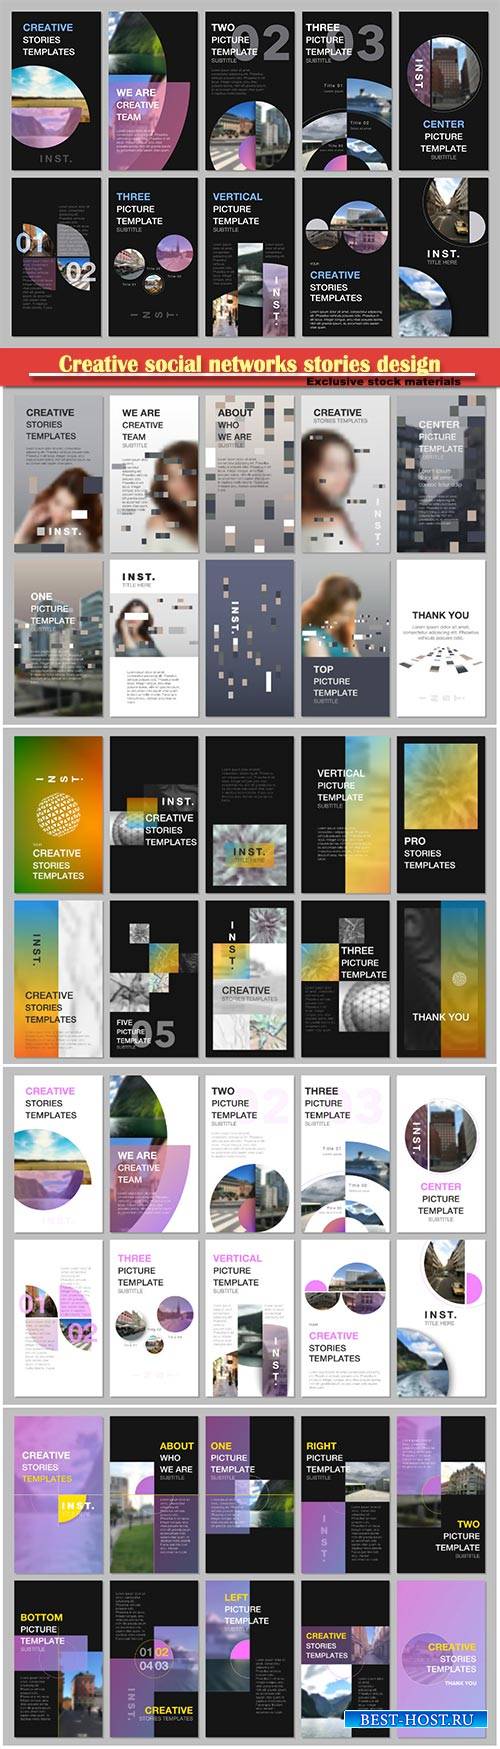 Creative social networks stories design, vertical banner or flyer templates